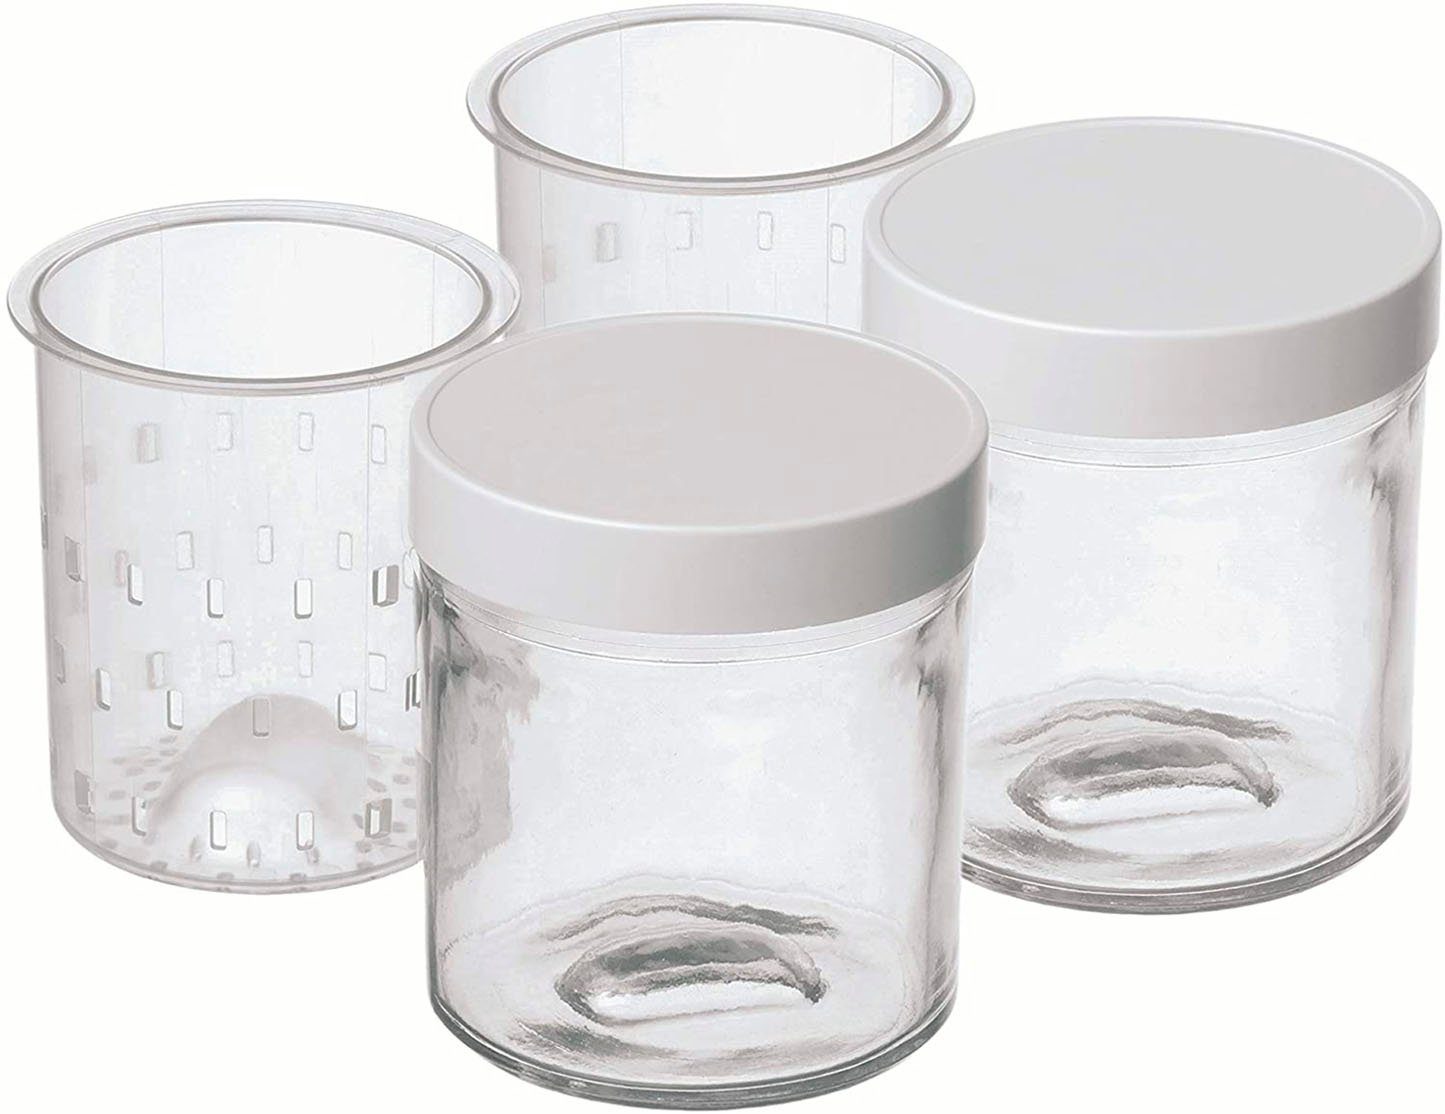 Kunststoff, Joghurtgläser (Set, 2 Zubereiter 2-tlg), Stk. Plastik, für YM402E, Cuisinart aus Glas, Joghurt